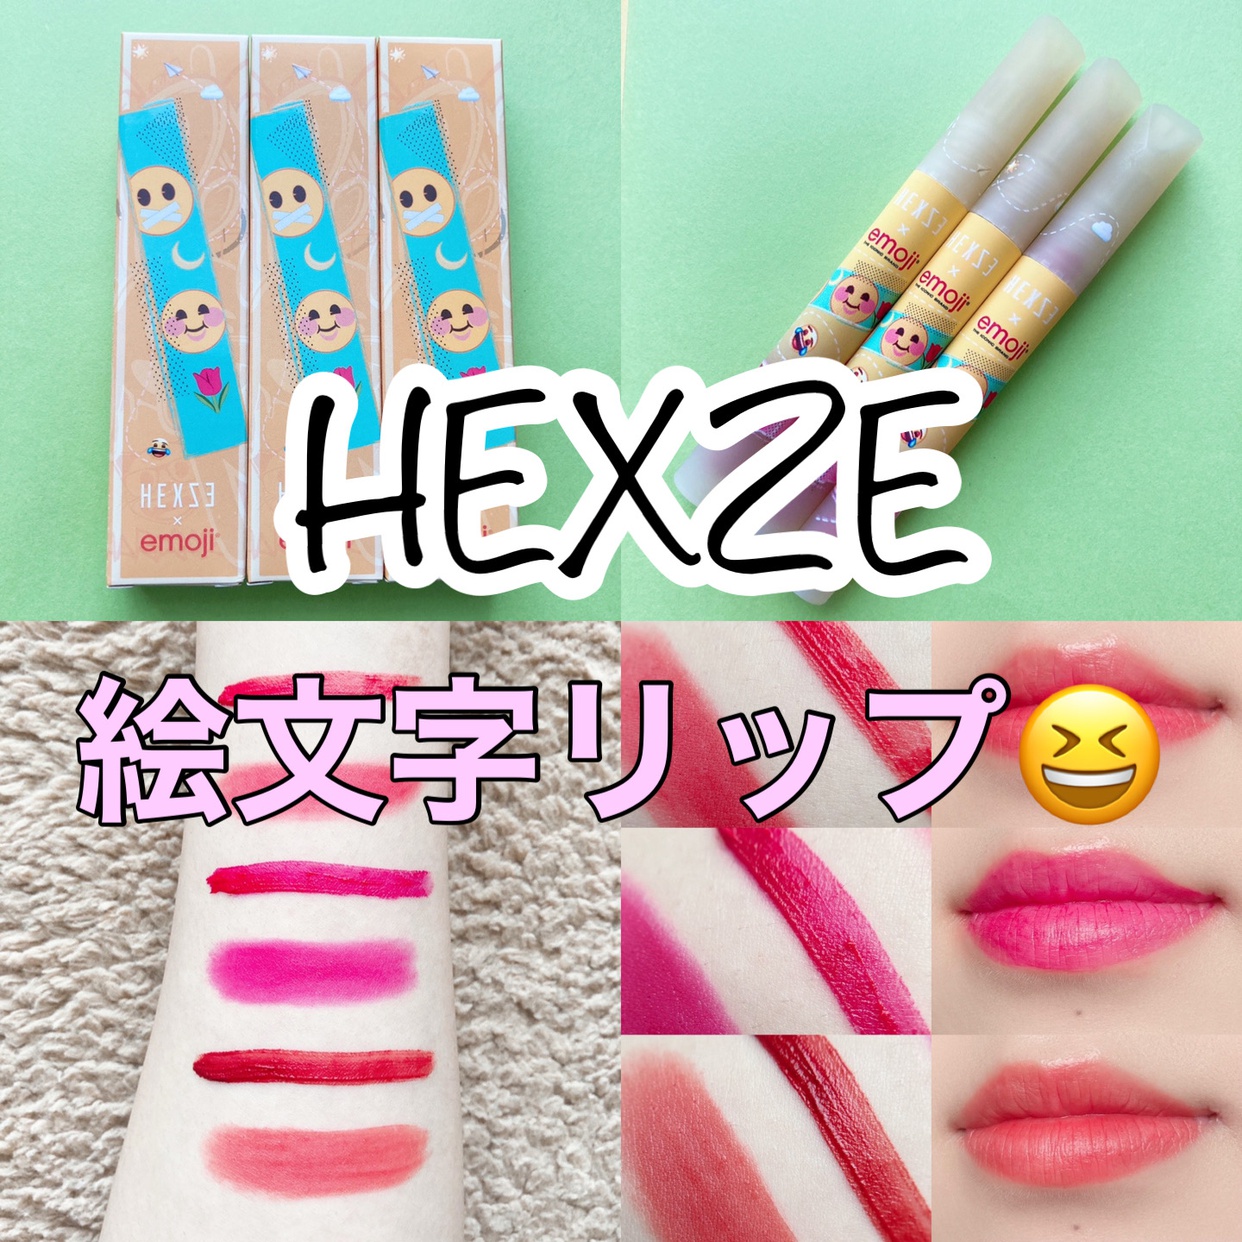 HEXZE(ヘックスゼ) emoji リップグロスの良い点・メリットに関するyunaさんの口コミ画像1